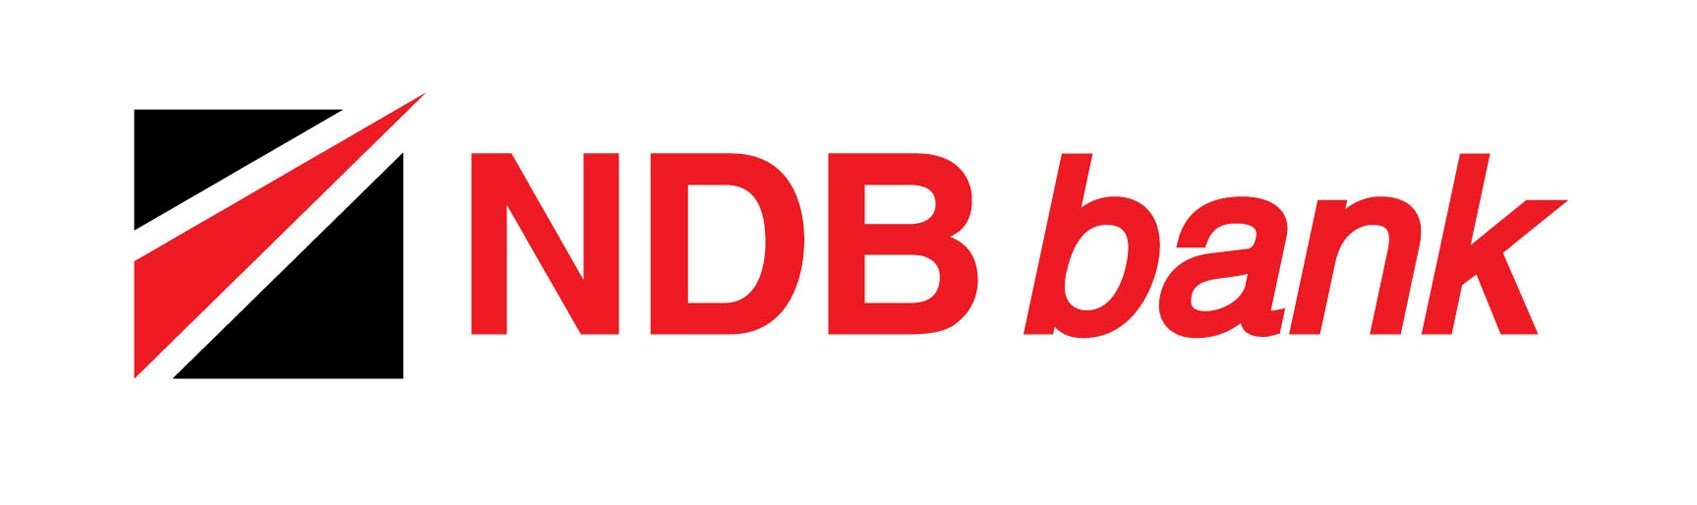 ndb-bank-logo